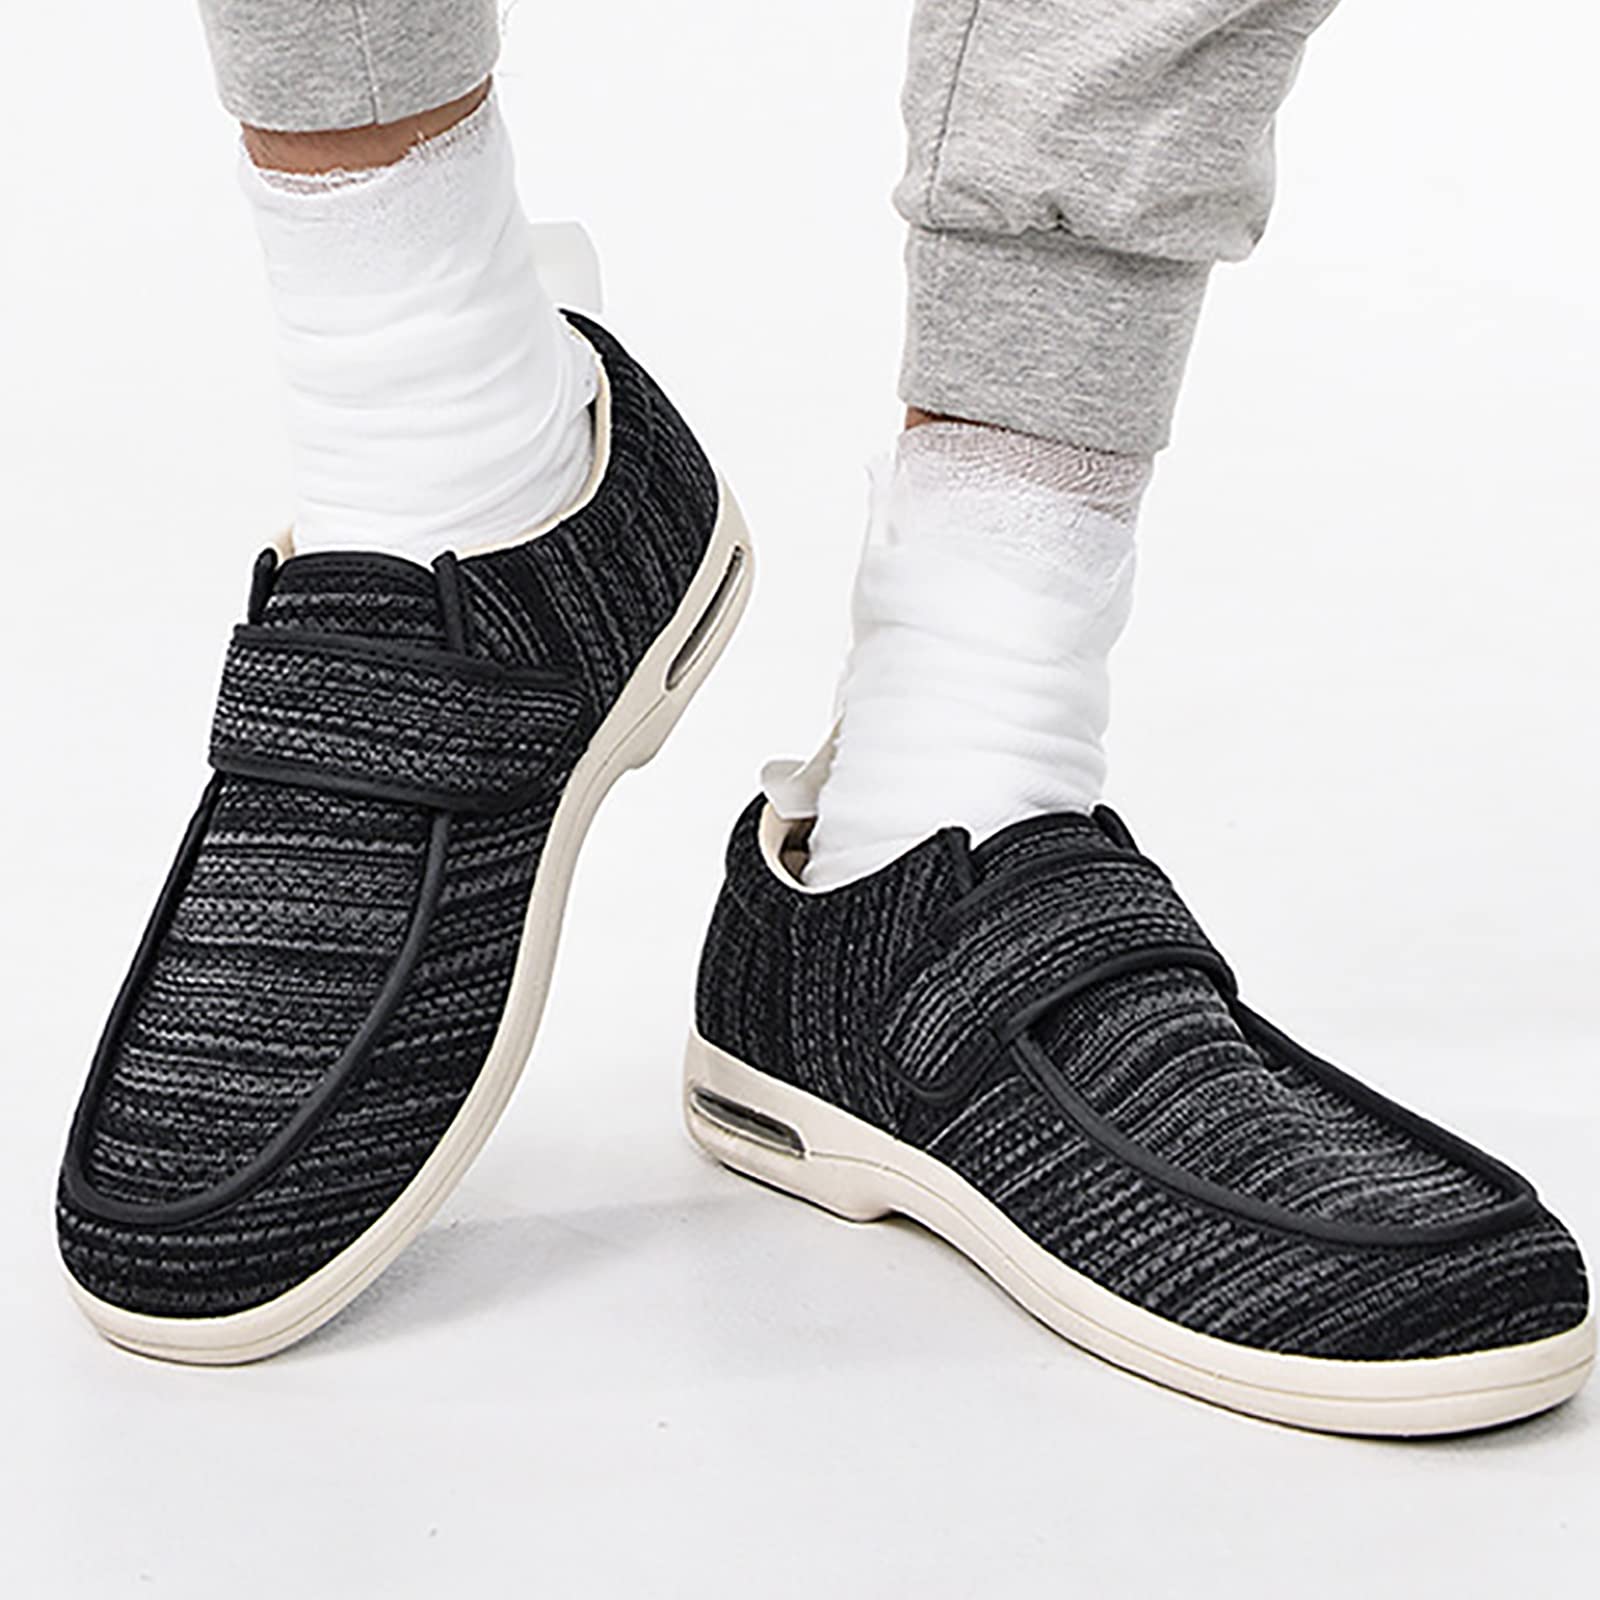 Eurosport | Sports Fashion, Fitness & Equipment | Skechers Dighton Rolind  Slip Resistant Velcro Sneakers (Extra Wide Fit) Men